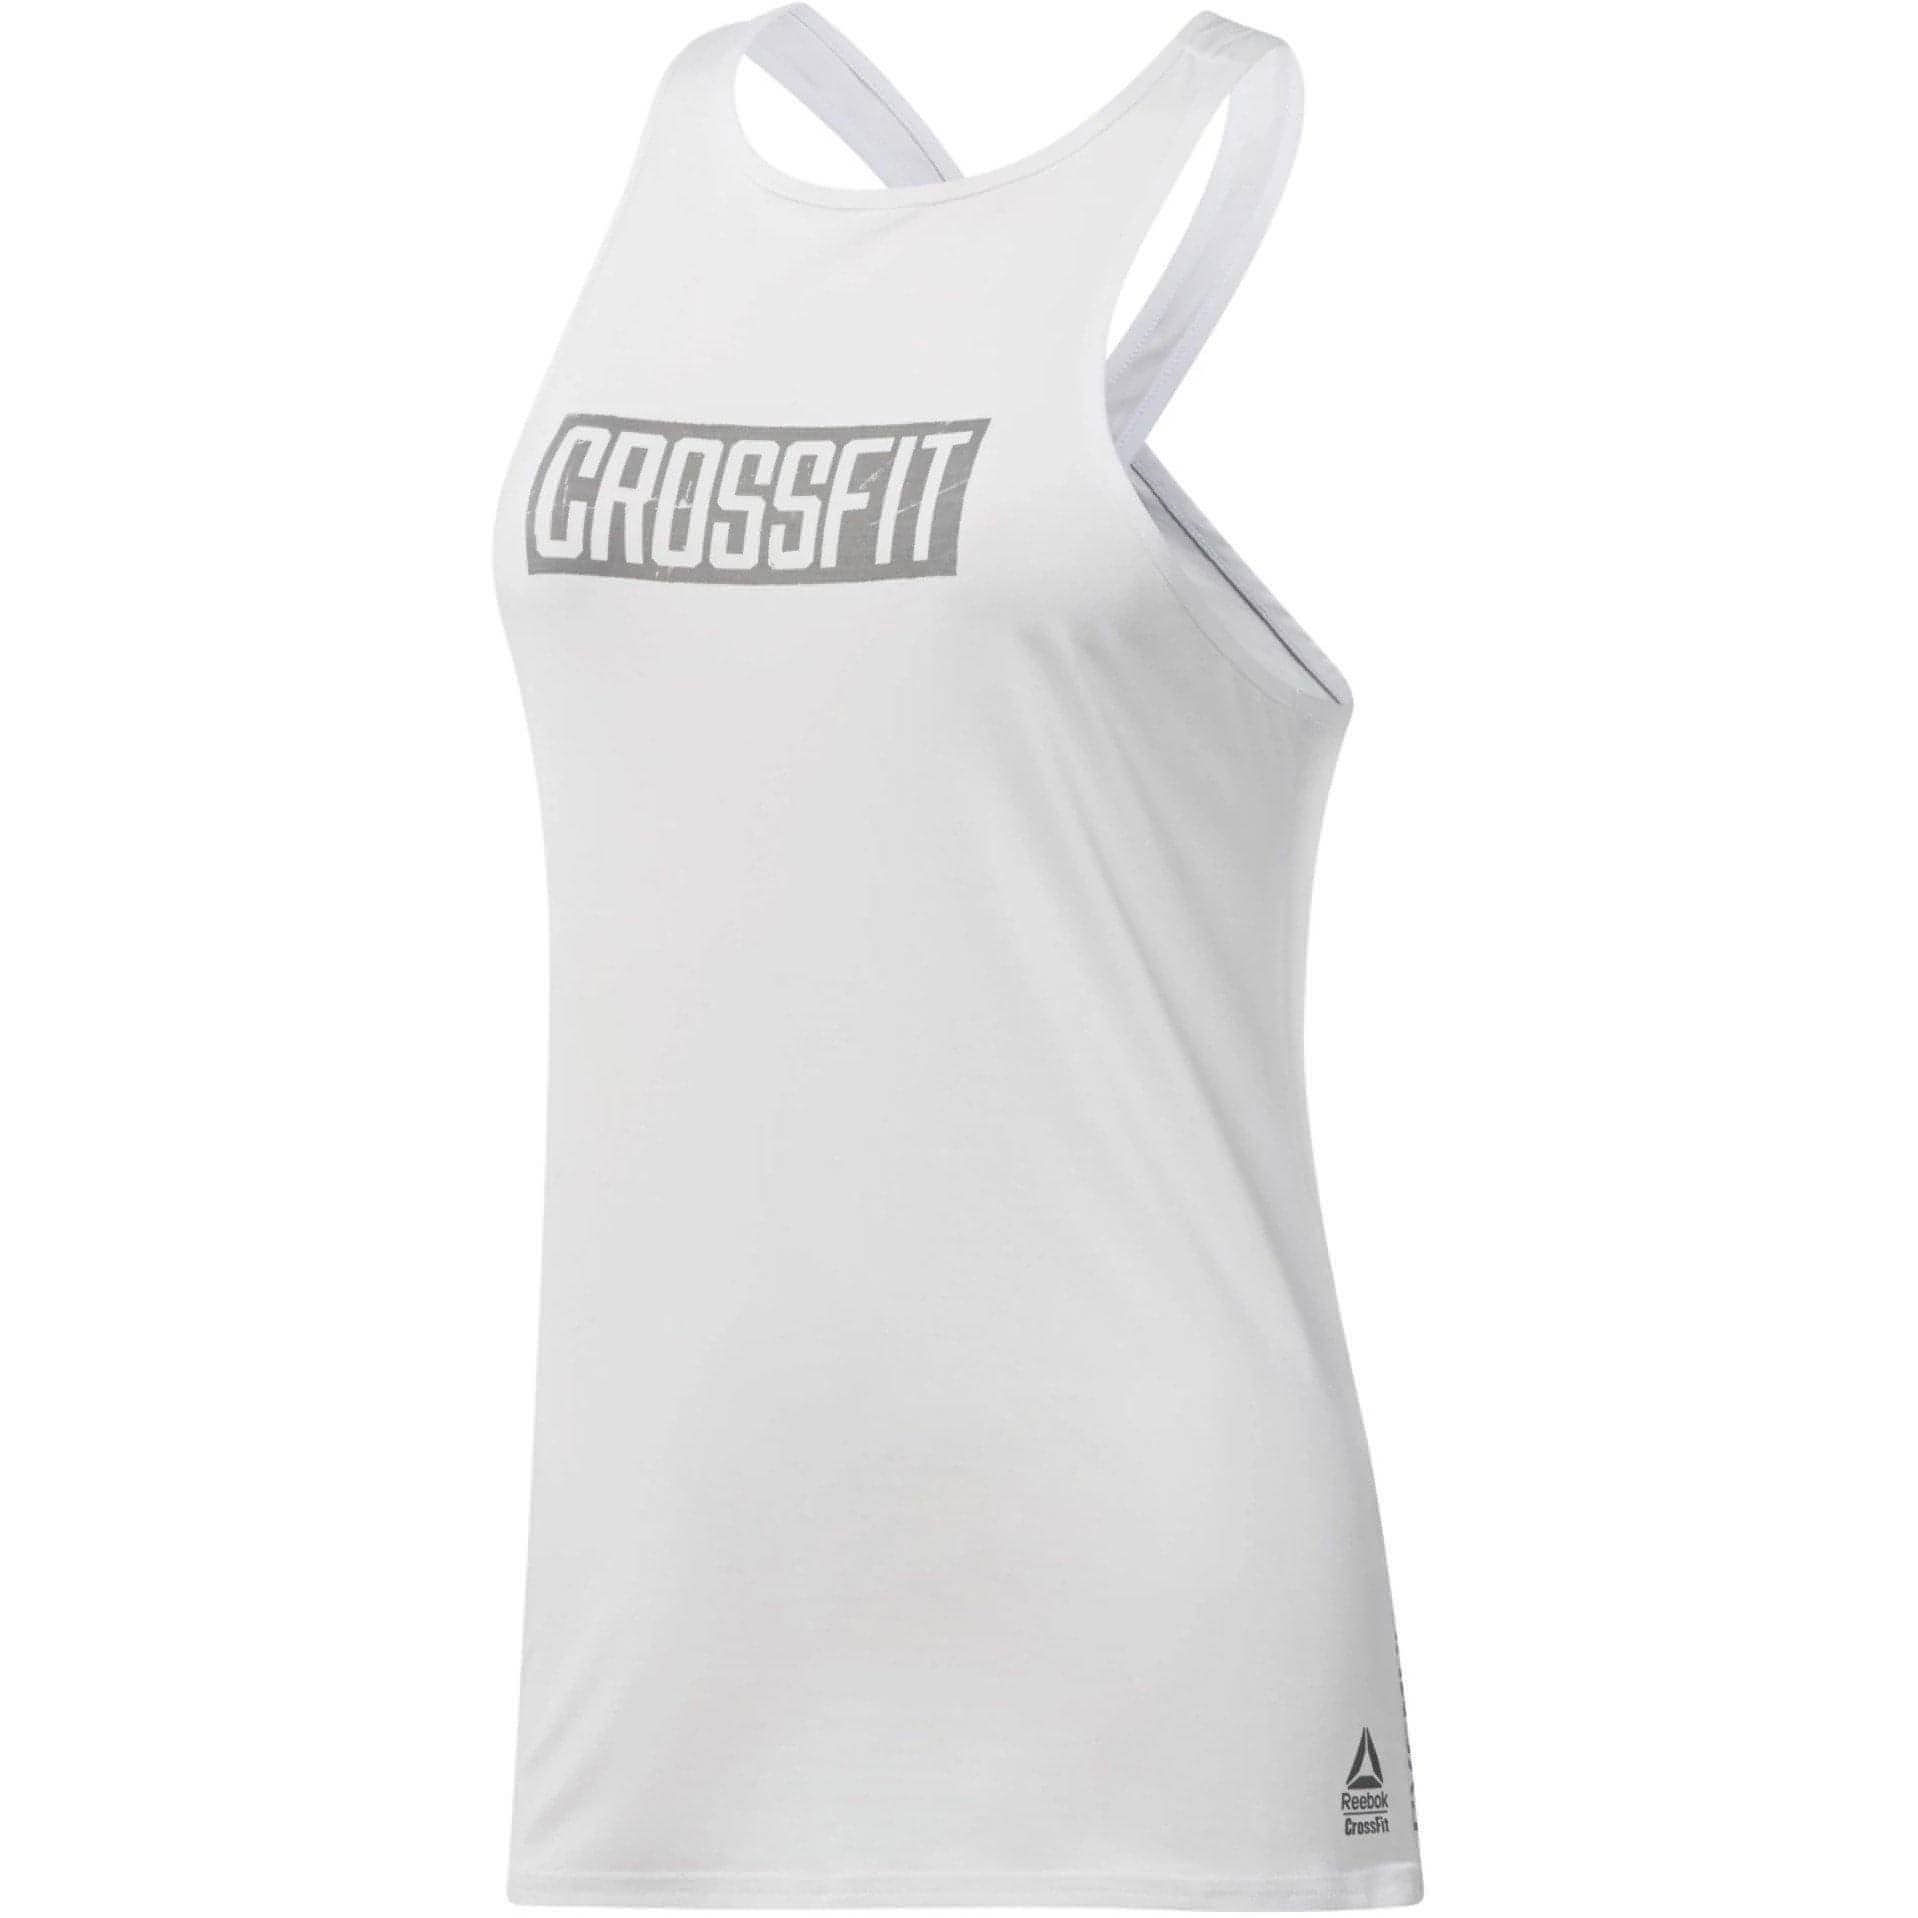 Reebok Crossfit Activchill Womens Training Vest Tank Top - White - Start Fitness